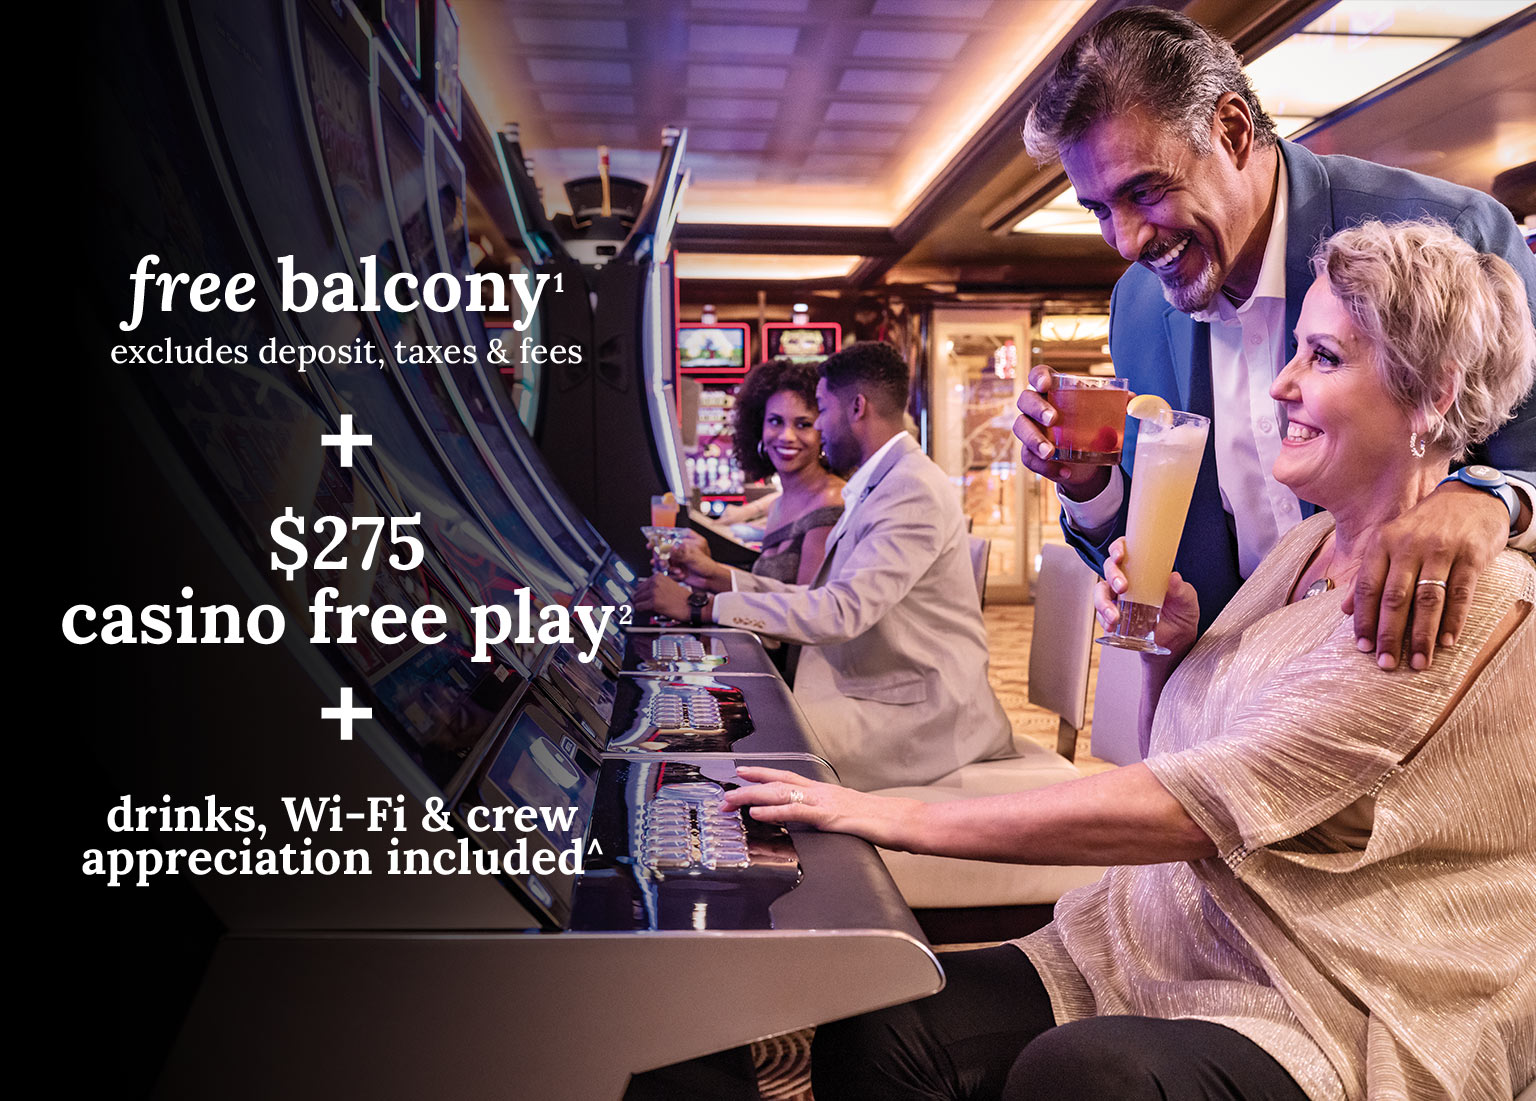 free balcony + $275 casino free play + drinks, Wi-Fi & crew appreciation. Click here to book.